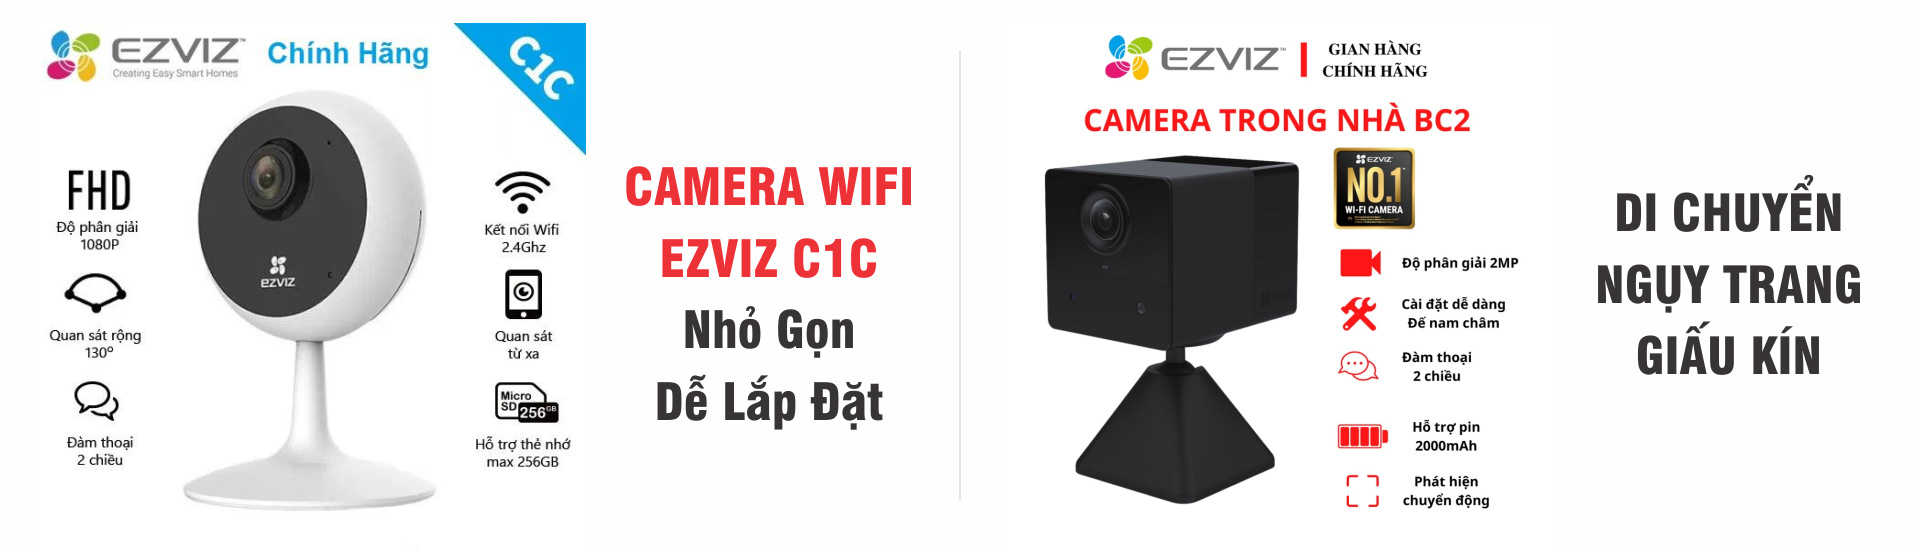 Camera Wifi EZVIZ C1C - BC2